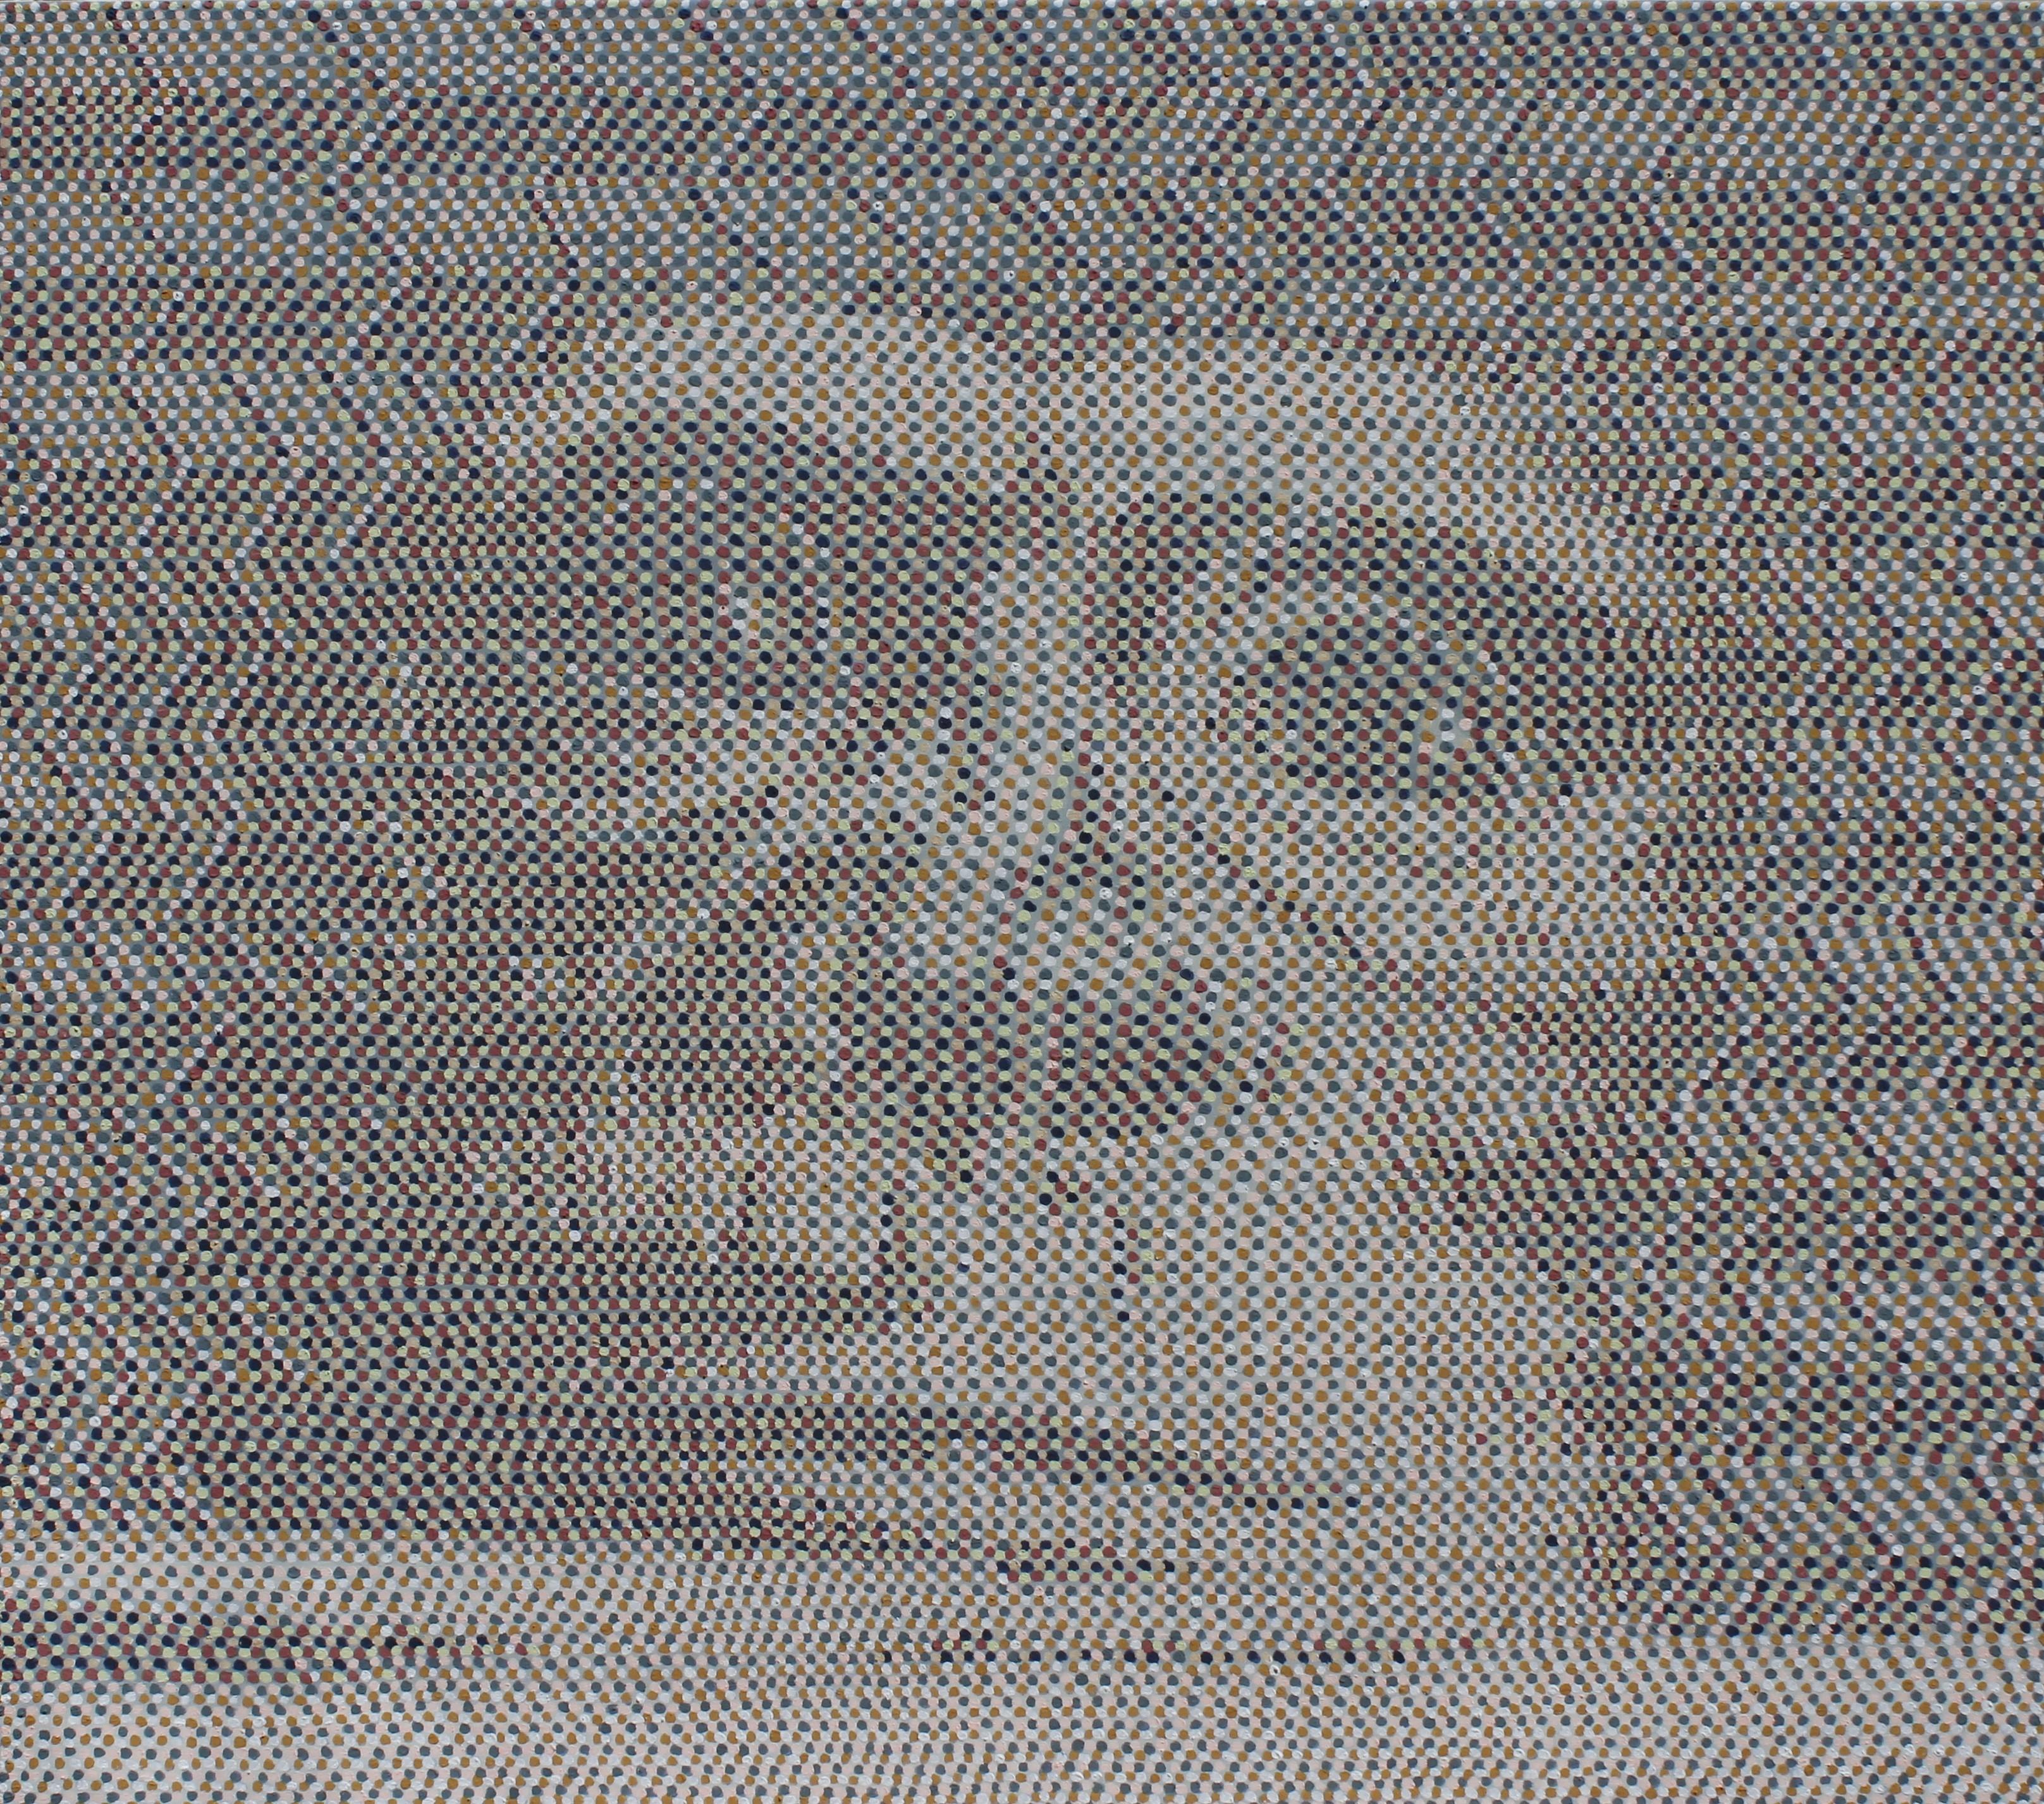 Andreas Lau Figurative Painting - HAM (Space Monkey), 21st century, modern, portrait, figurative, 